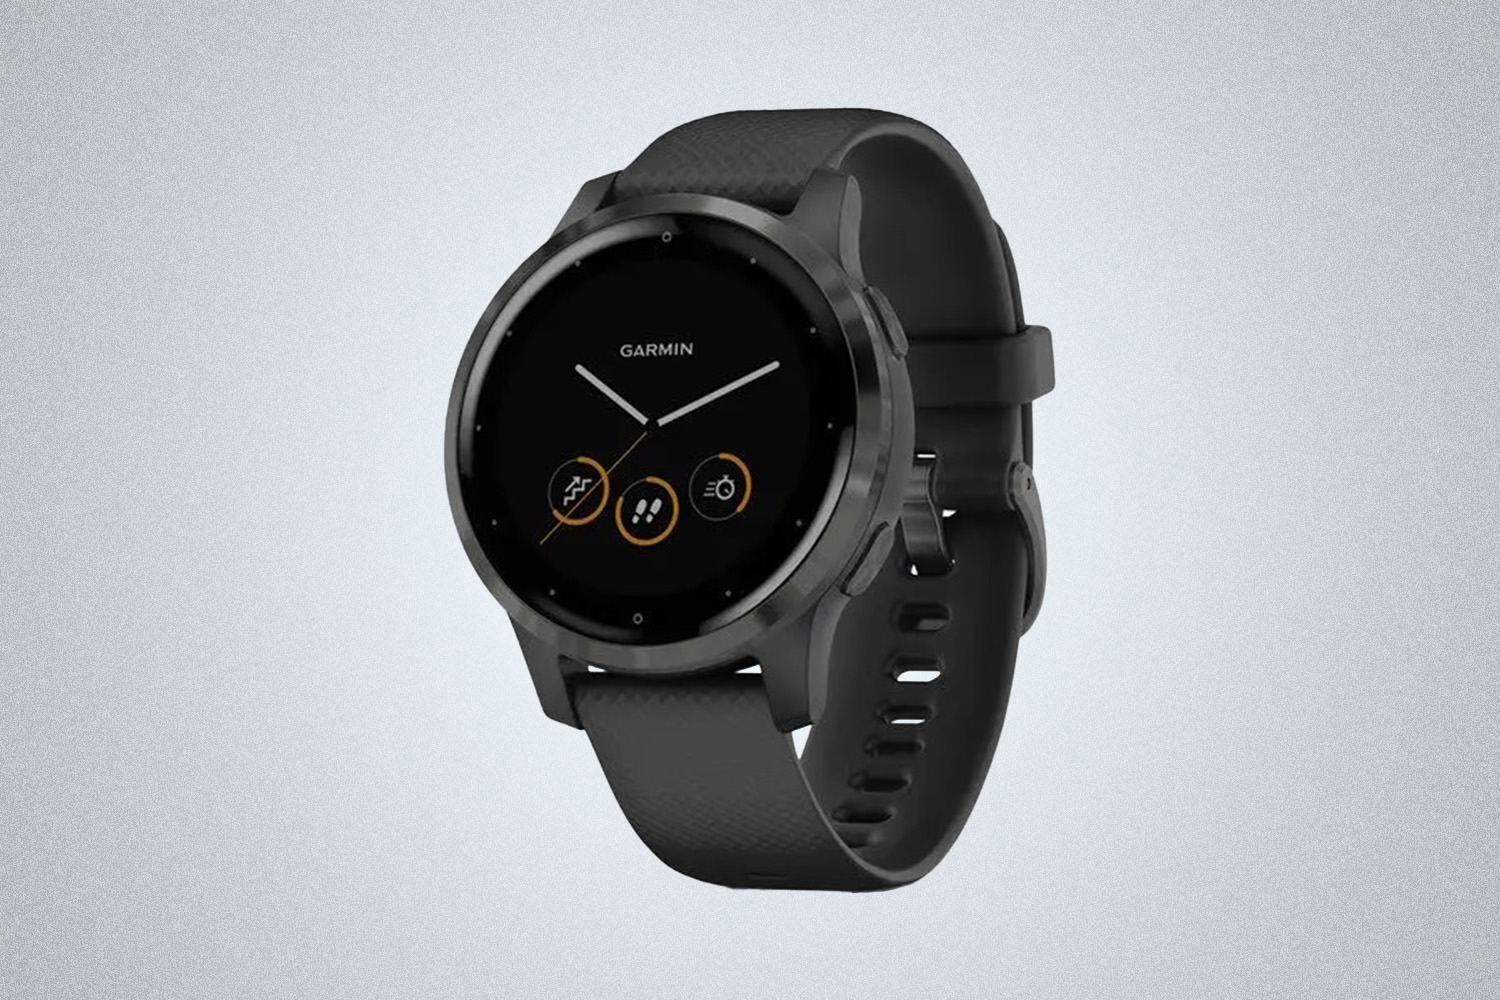 a Garmin smartwatch device on a grey background